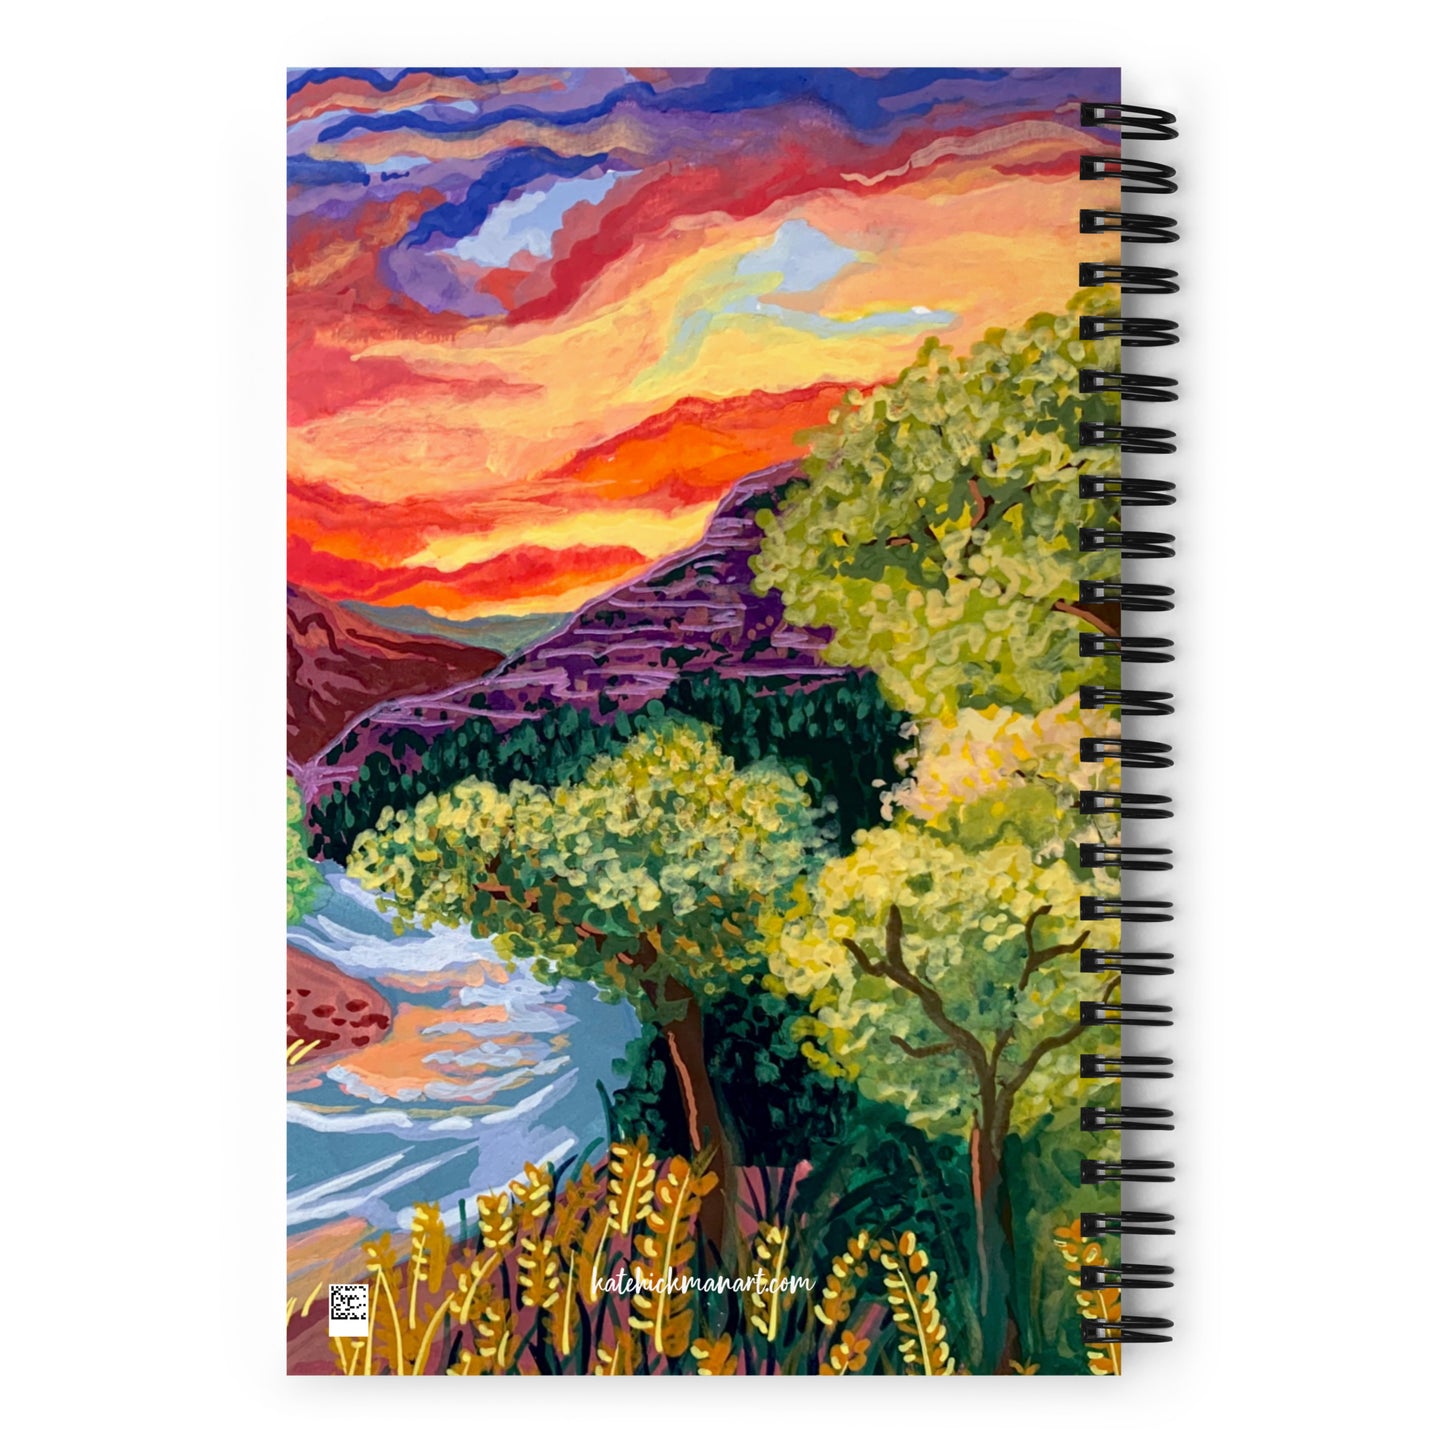 Zion National Park Notebook